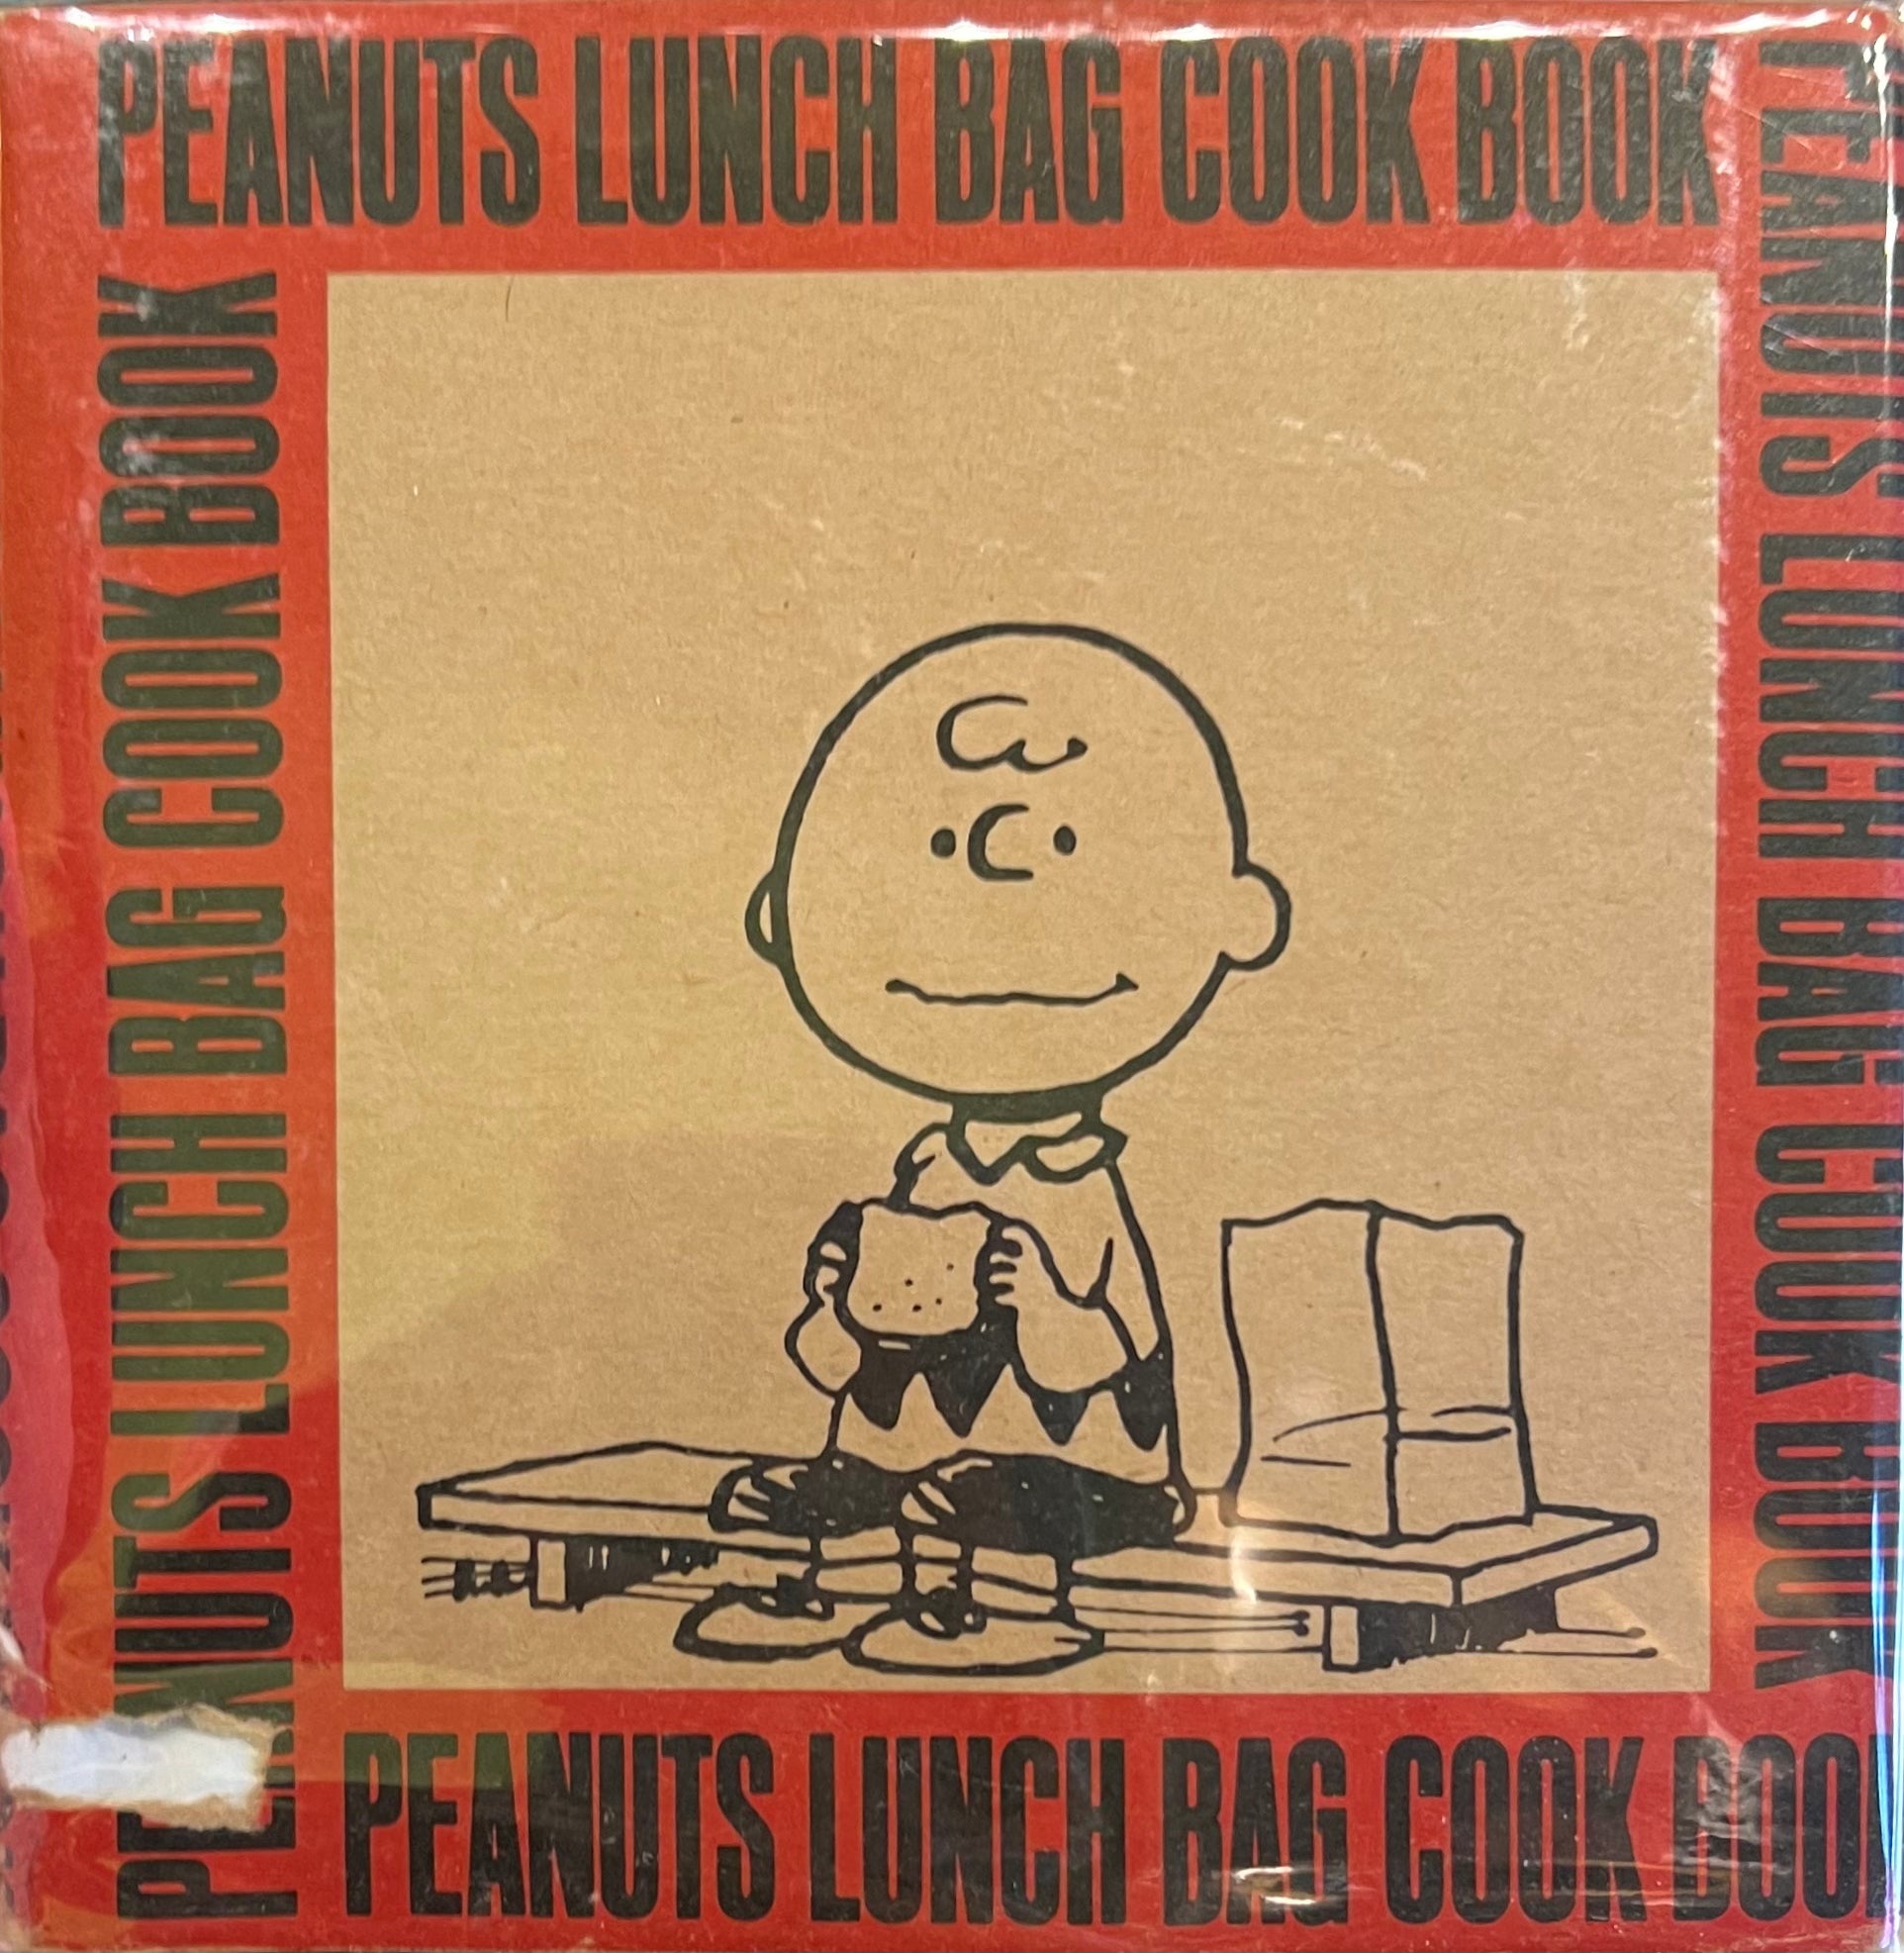 Peanuts Lunch Bag Cook Book スヌーピー - 通販 - gofukuyasan.com